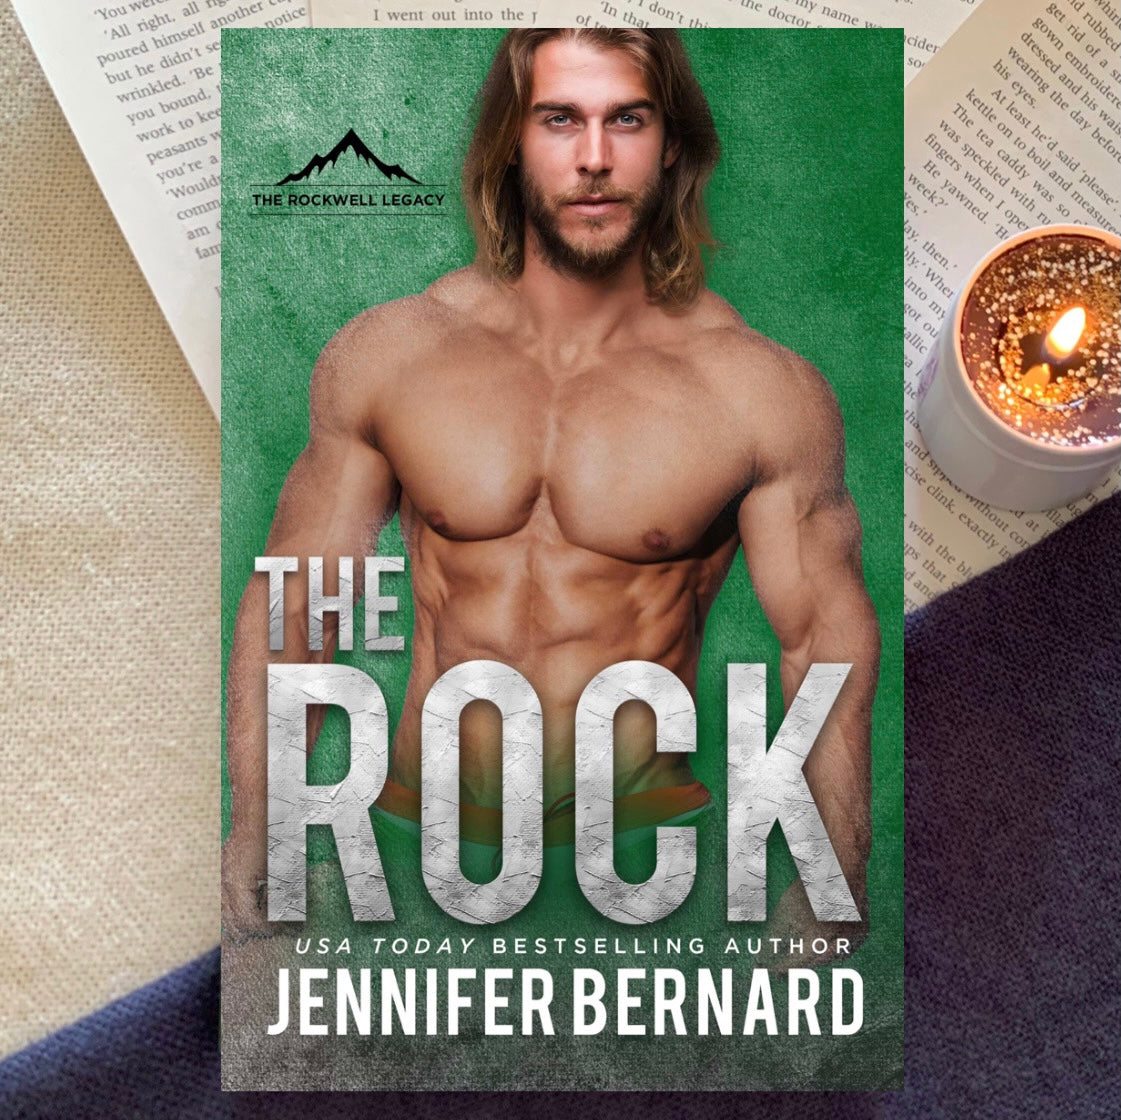 The Rockwell Legacy series by Jennifer Bernard